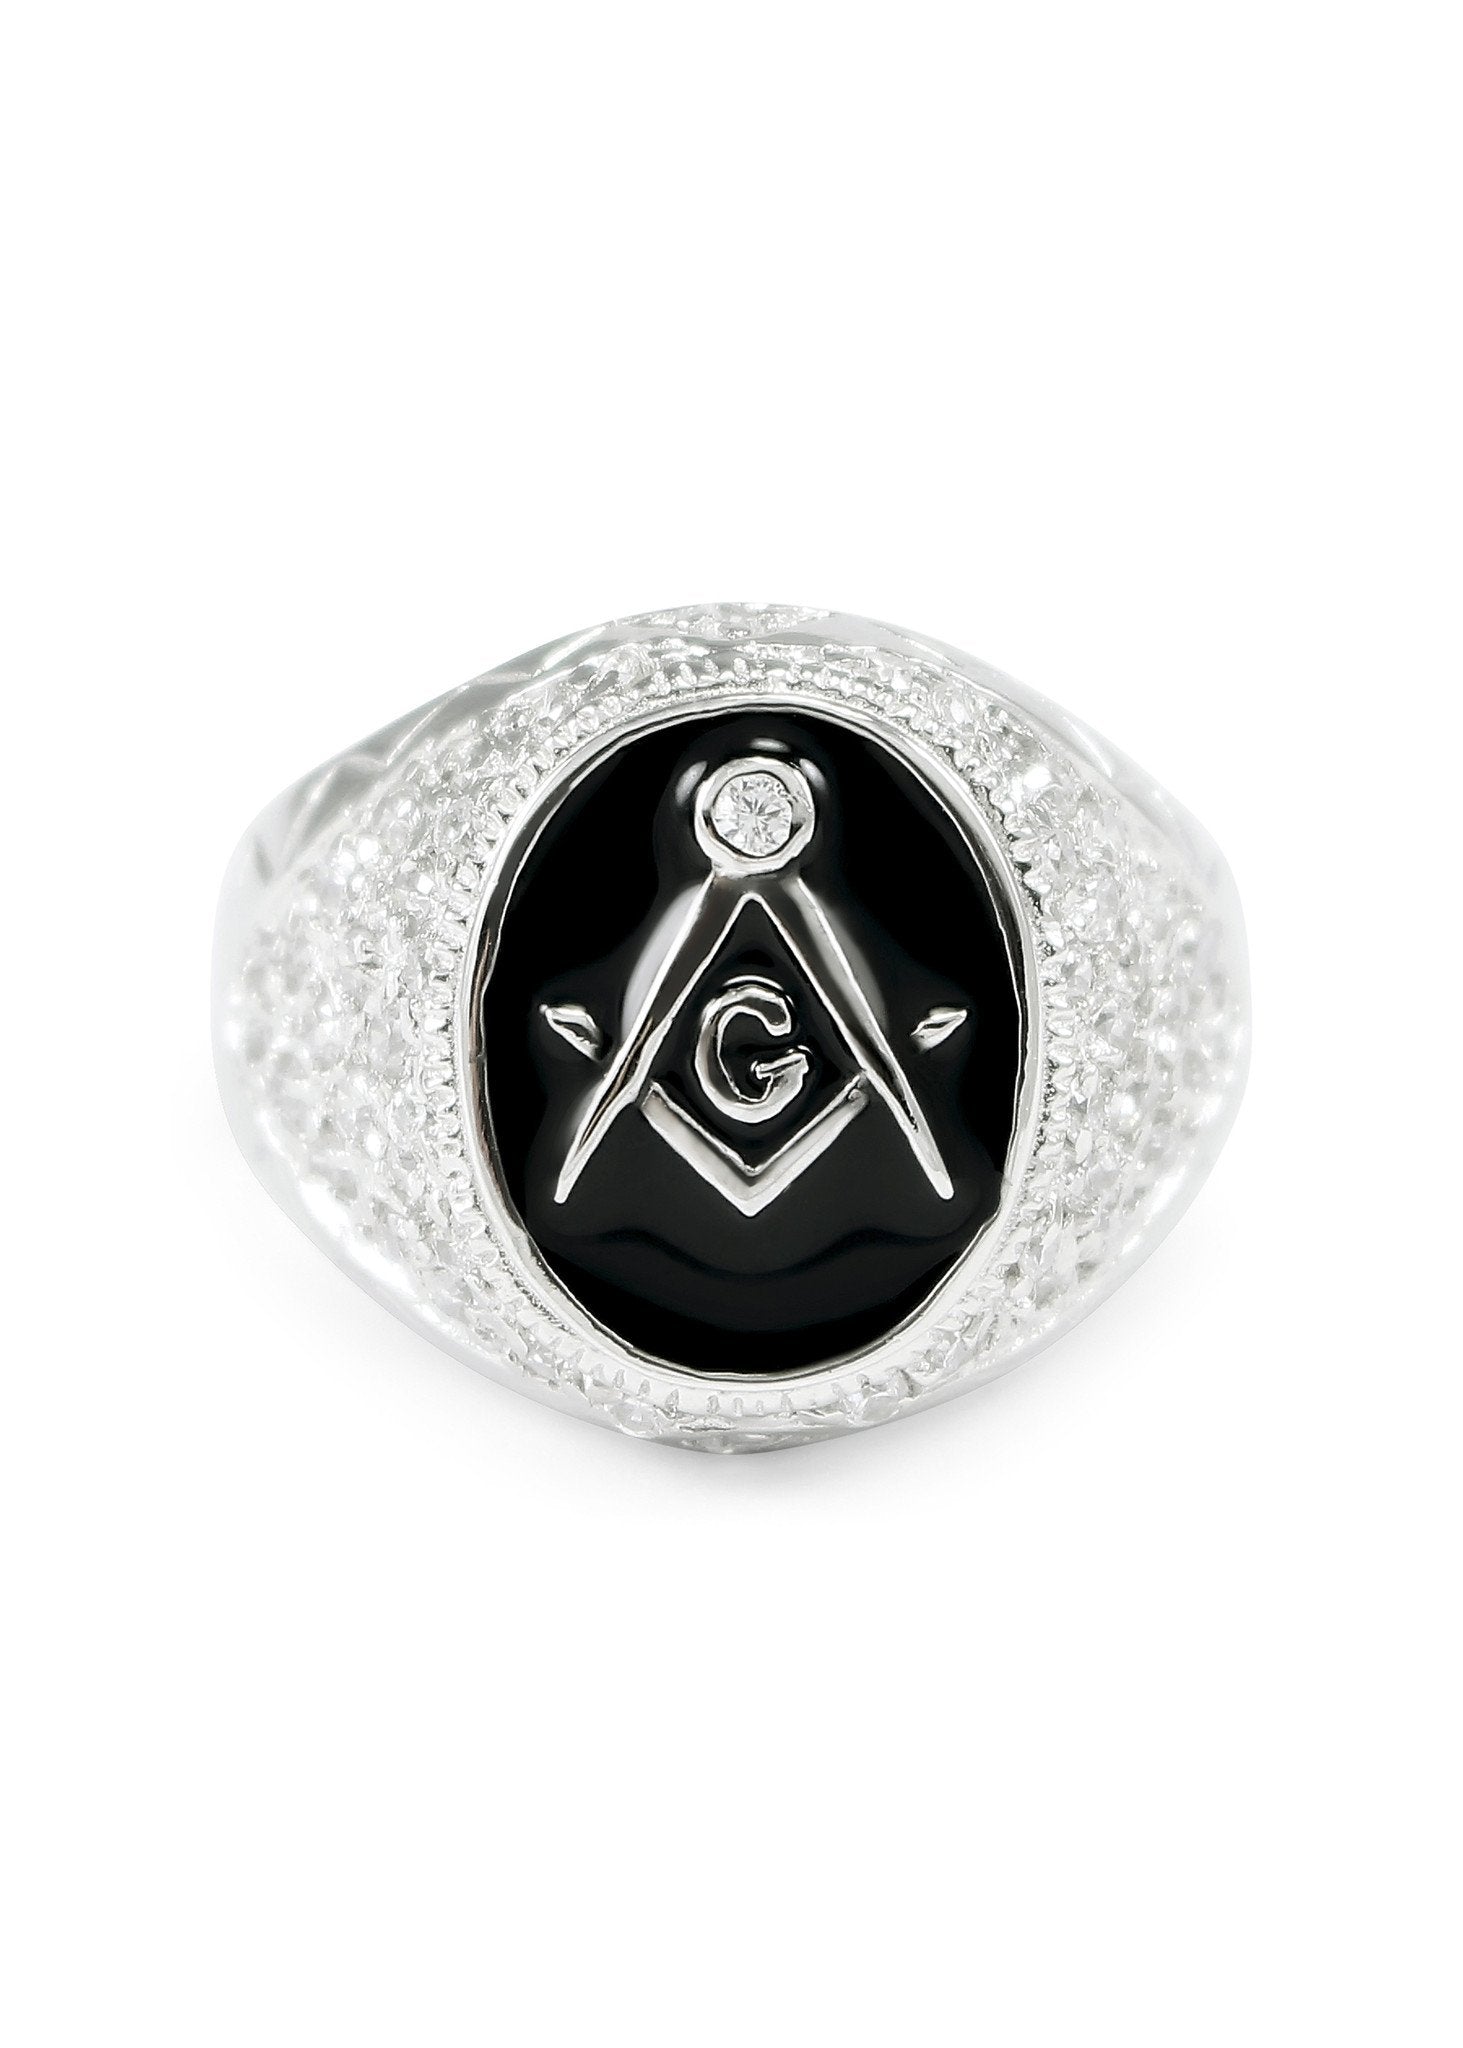 Personalized Ornate Free Mason Compass Ring Engraved Masonic Ring – Think  Engraved